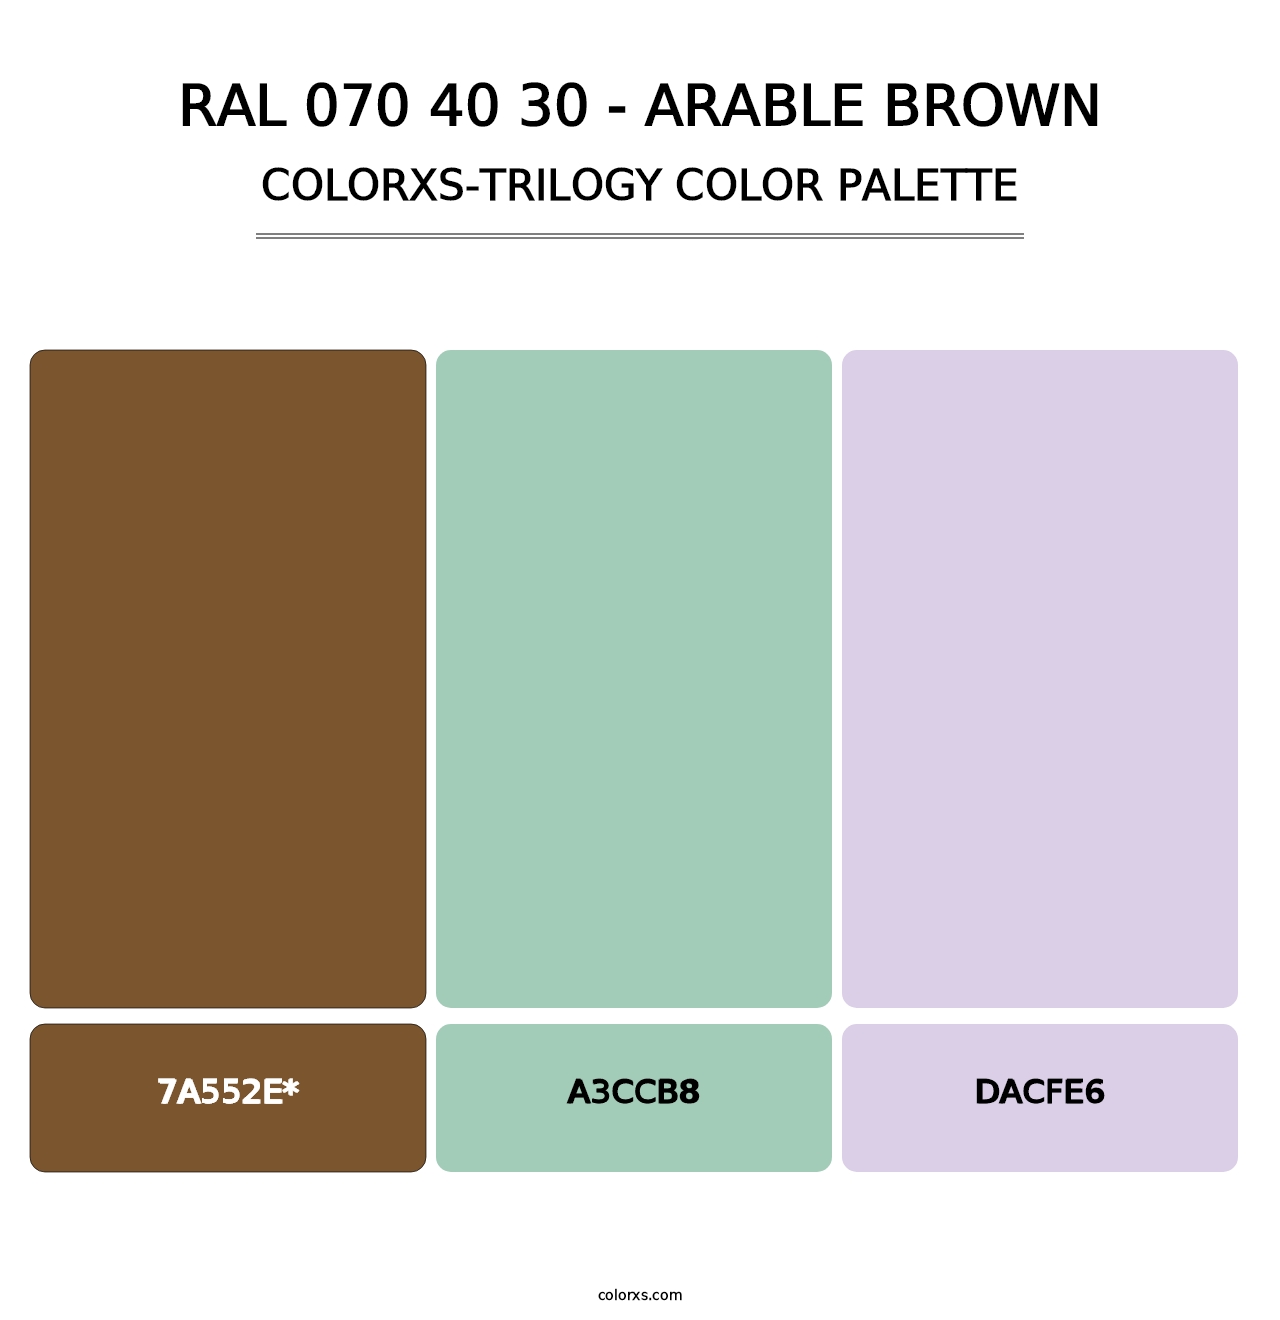 RAL 070 40 30 - Arable Brown - Colorxs Trilogy Palette